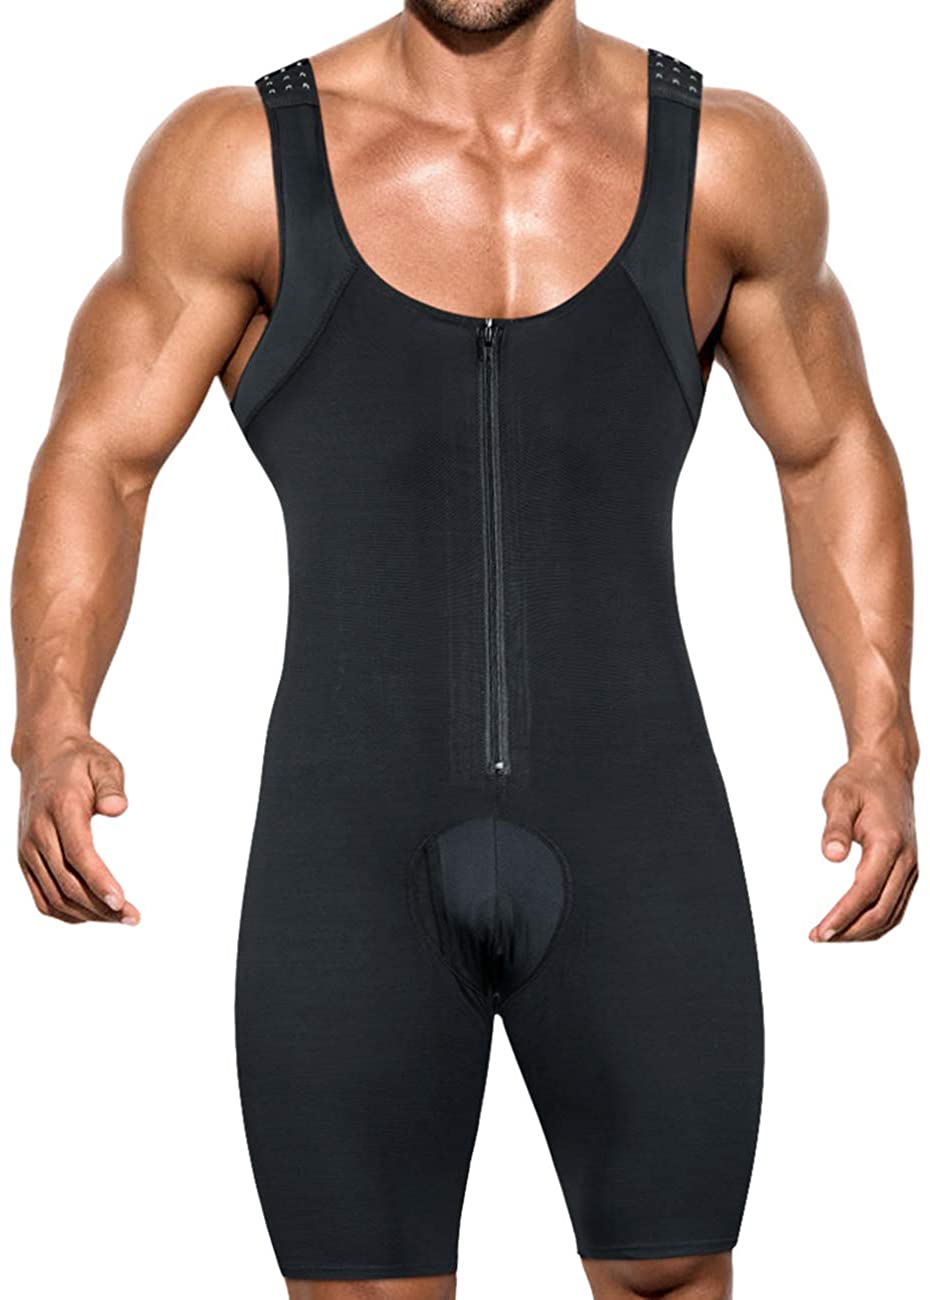 NonEcho Men Shapewear Tummy Control Full Body Shaper Slimming Bodysuit Plus Size eBay